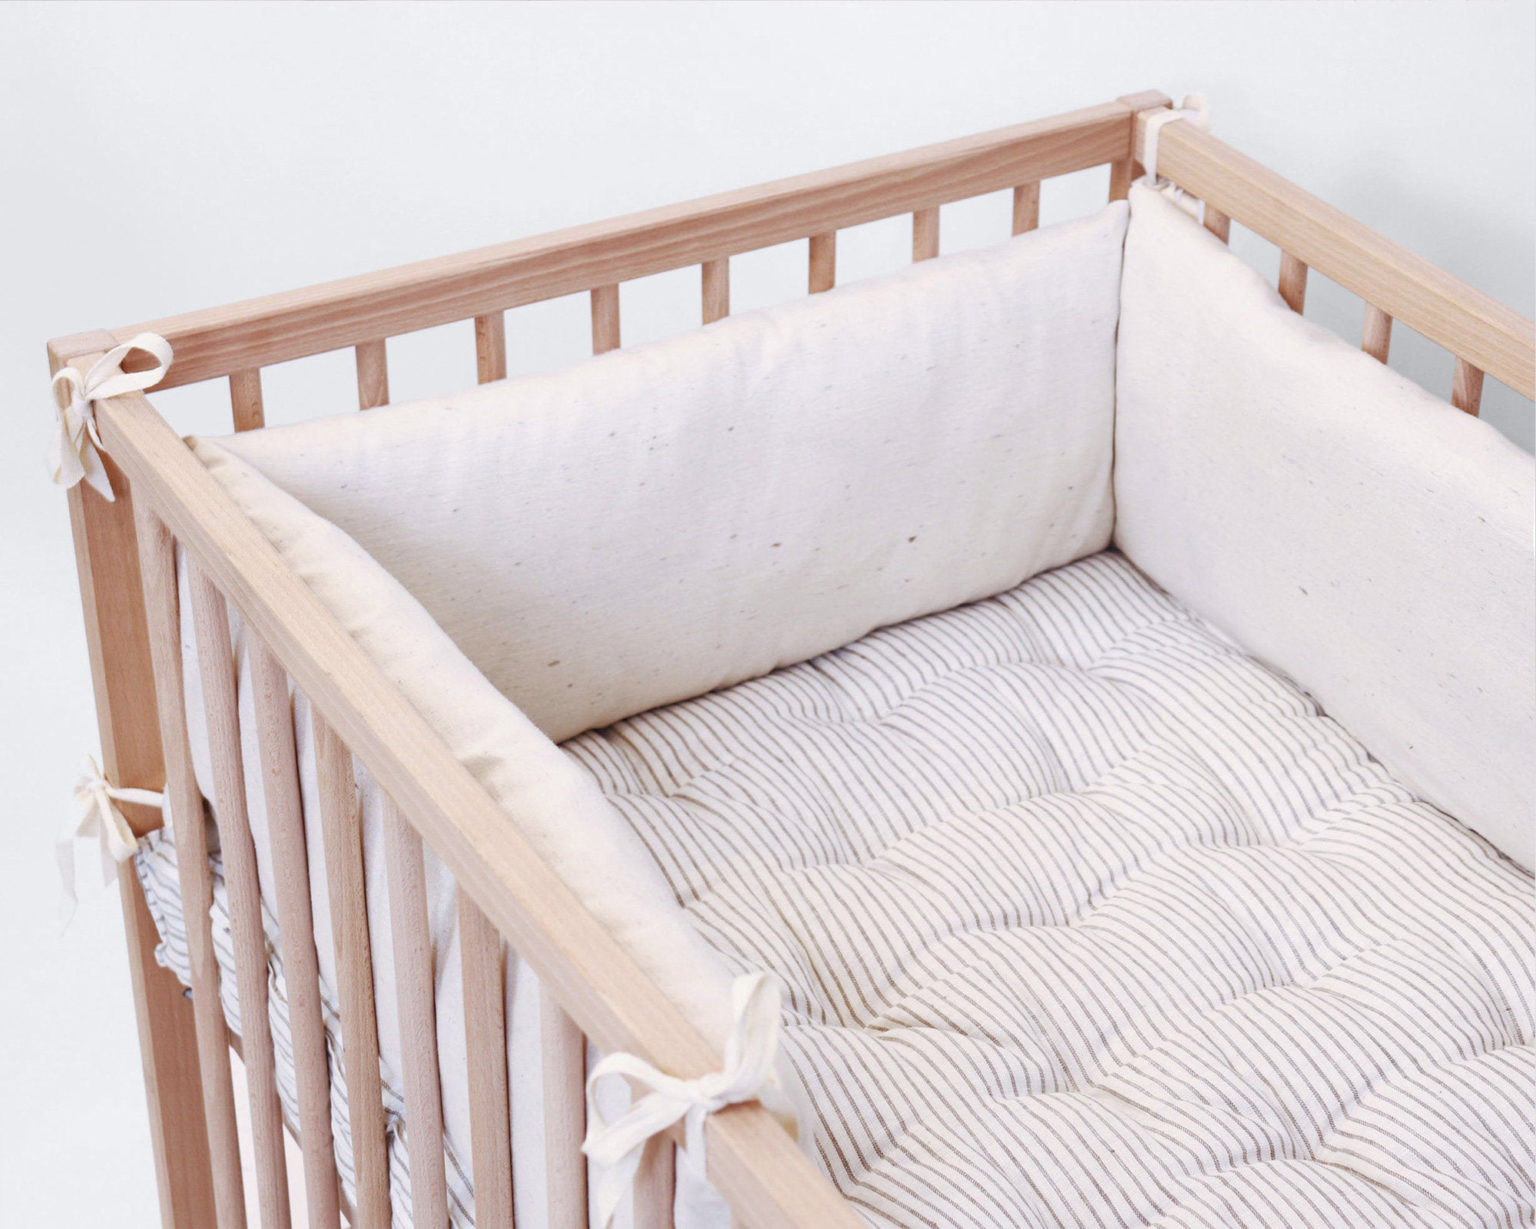 44 x 22 baby crib mattress